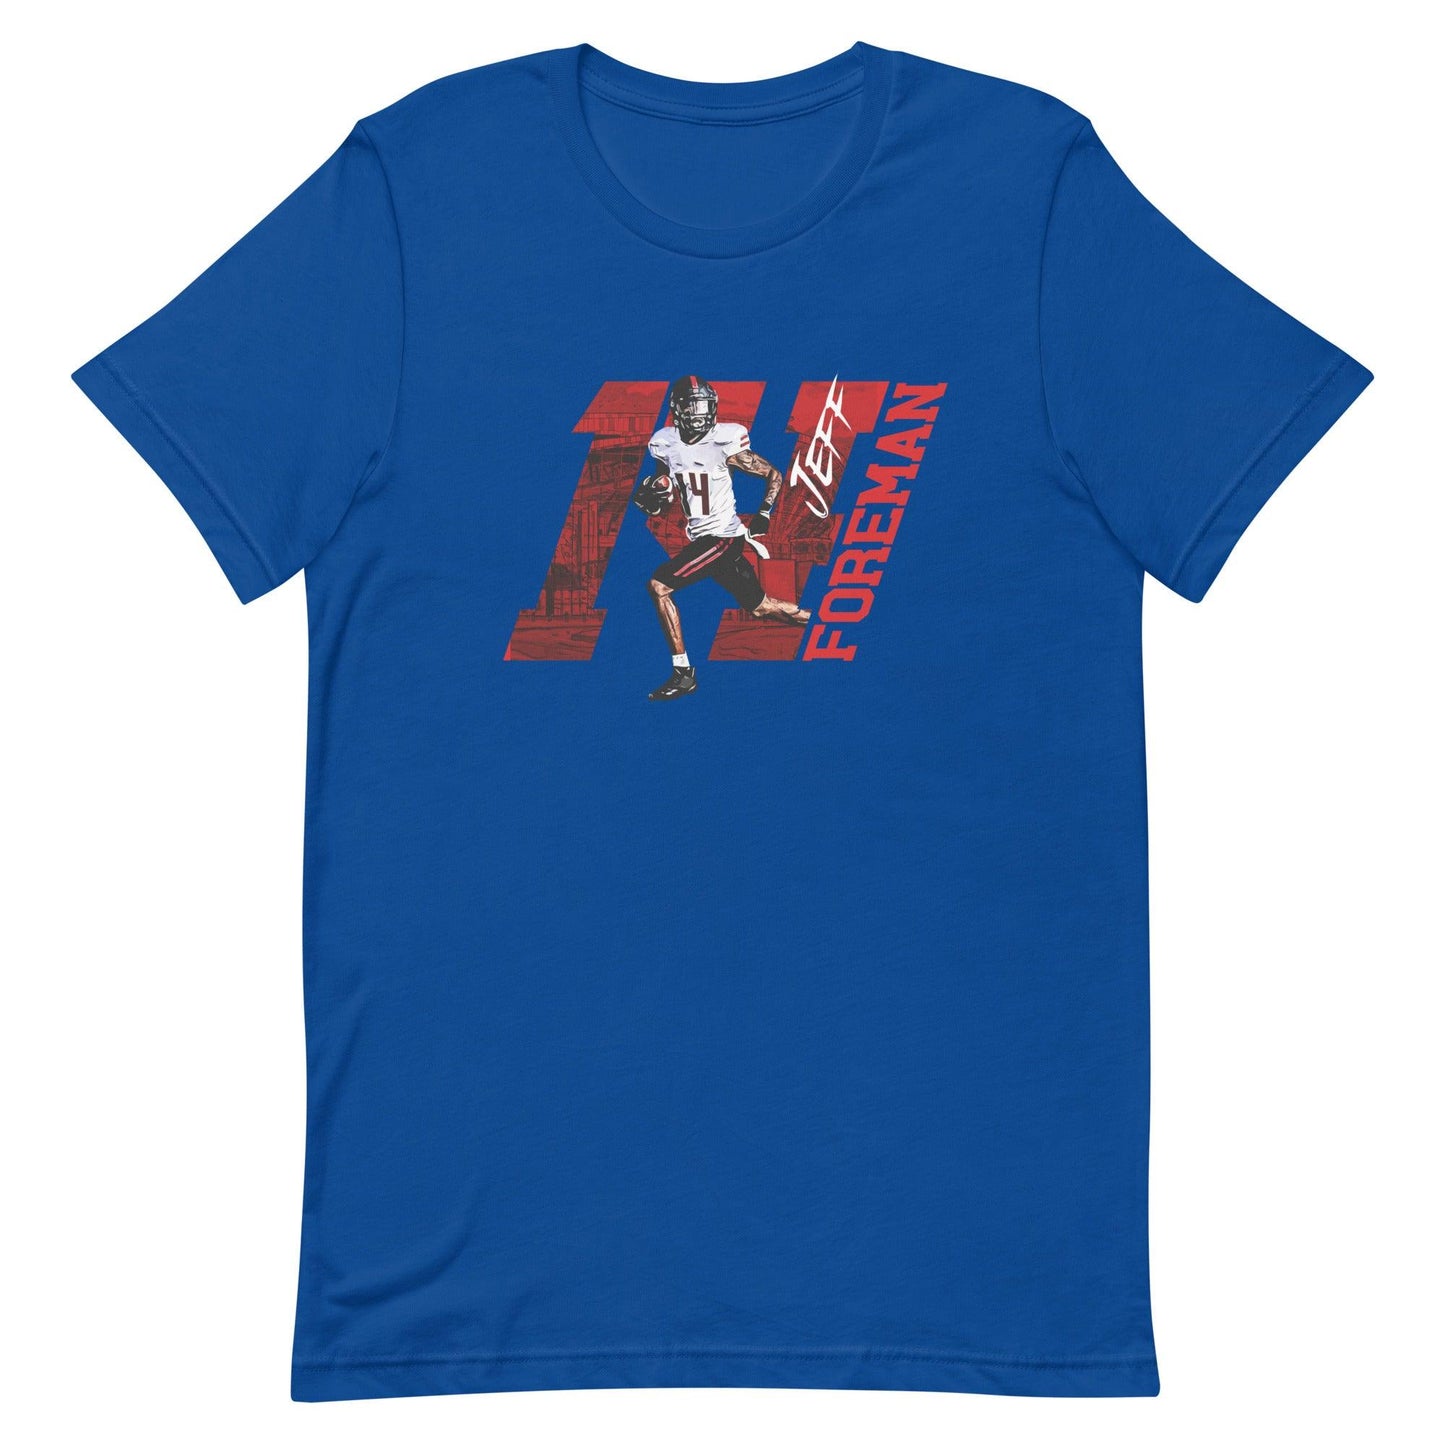 Jeff Foreman "14" t-shirt - Fan Arch